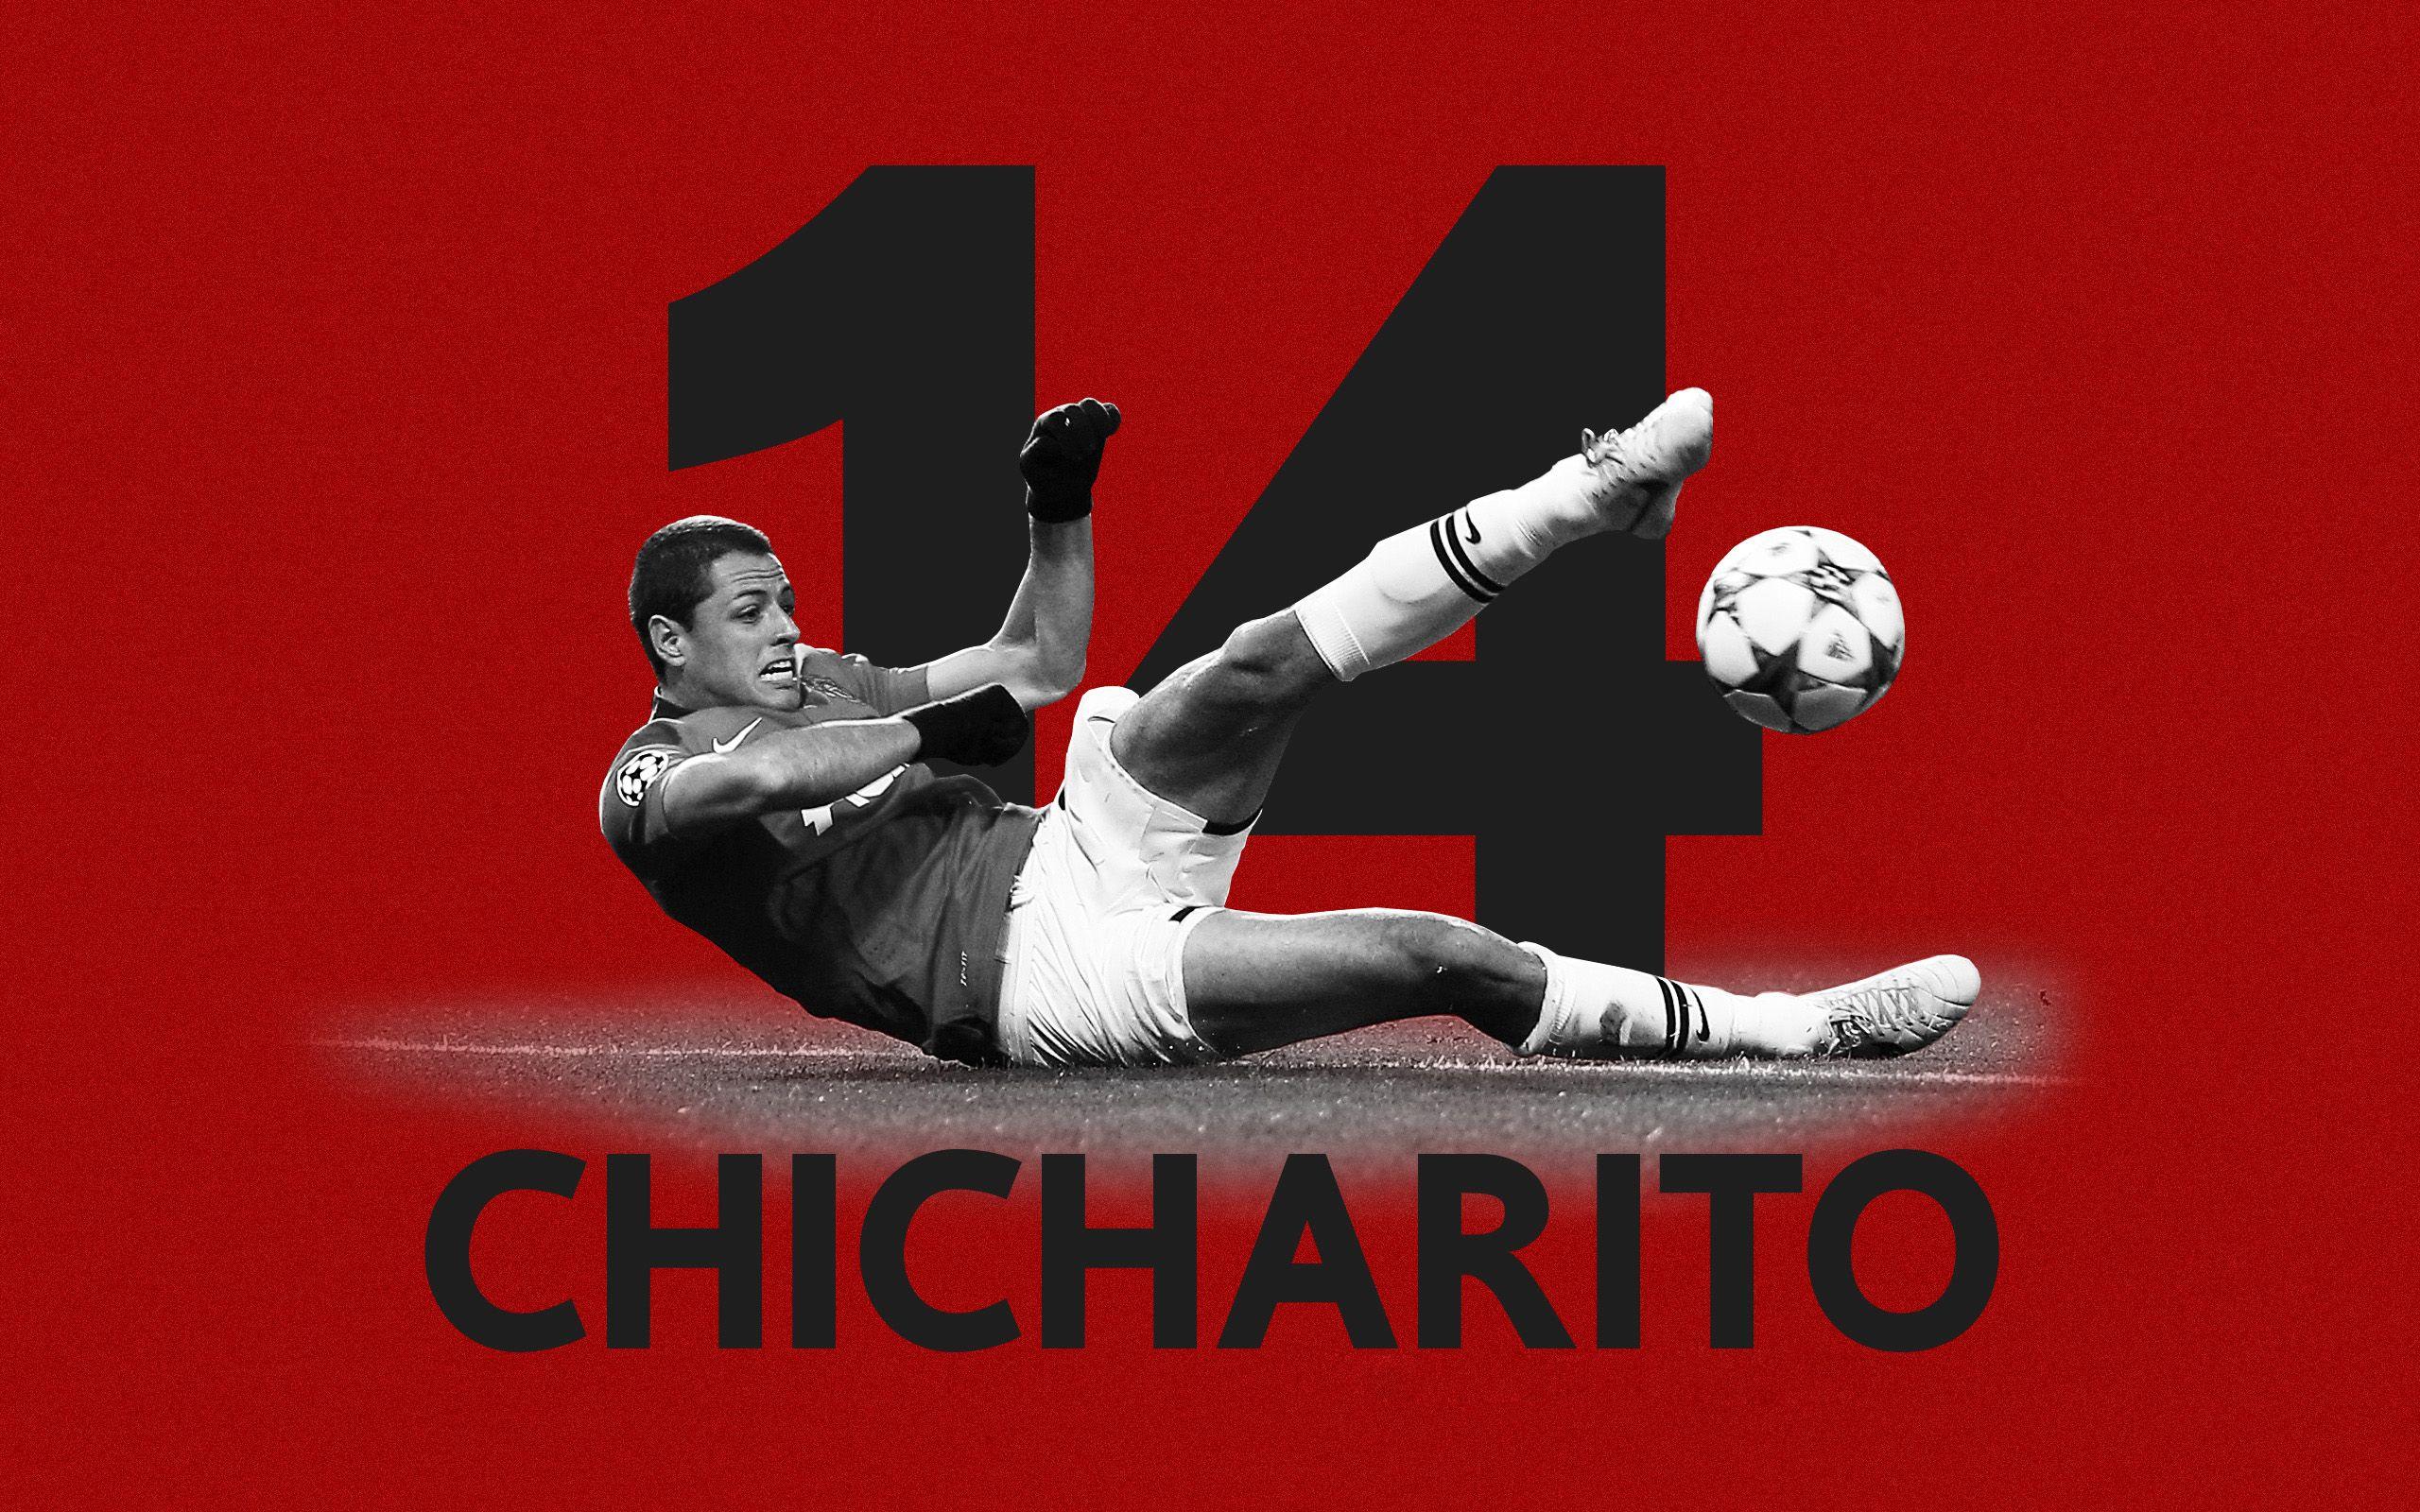 Chicharito Logo - Chicharito Backgrounds Free Download | PixelsTalk.Net